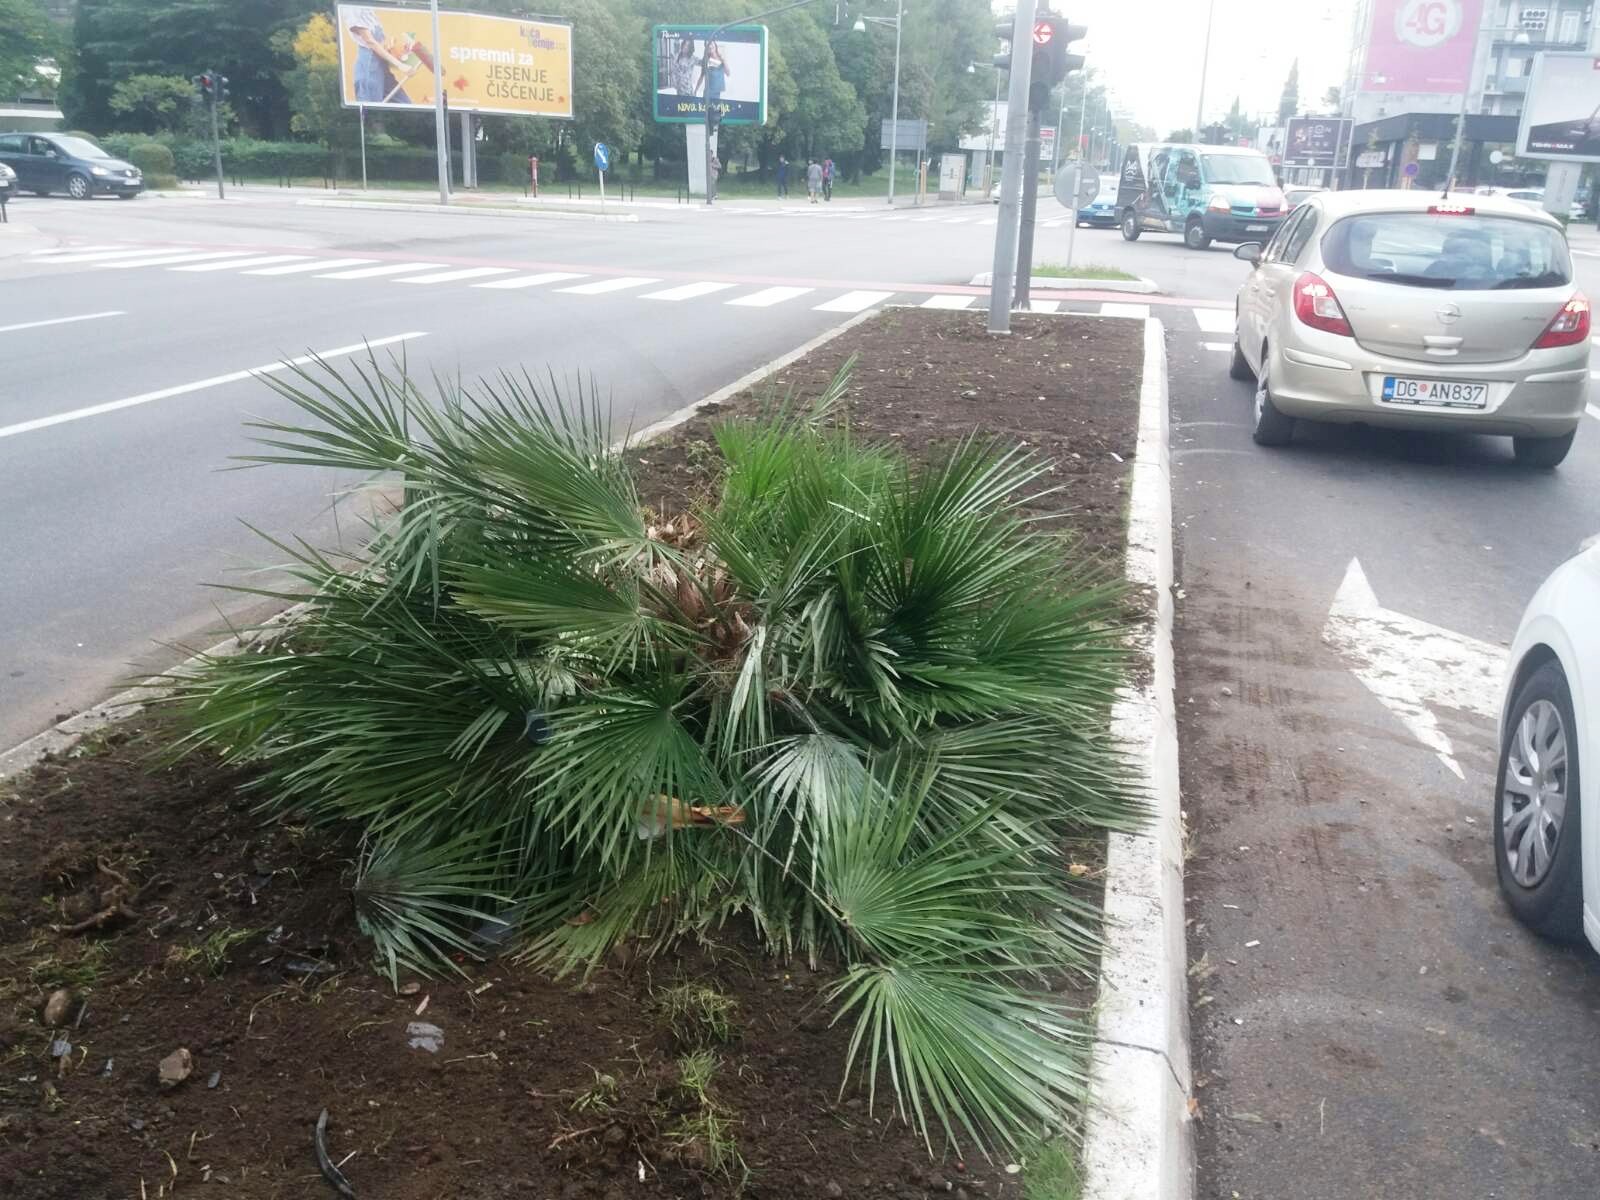 Uništeno zelenilo na Bulevaru 21. maj, apelujemo na vozače da se savjesno ophode prema zelenim površinama